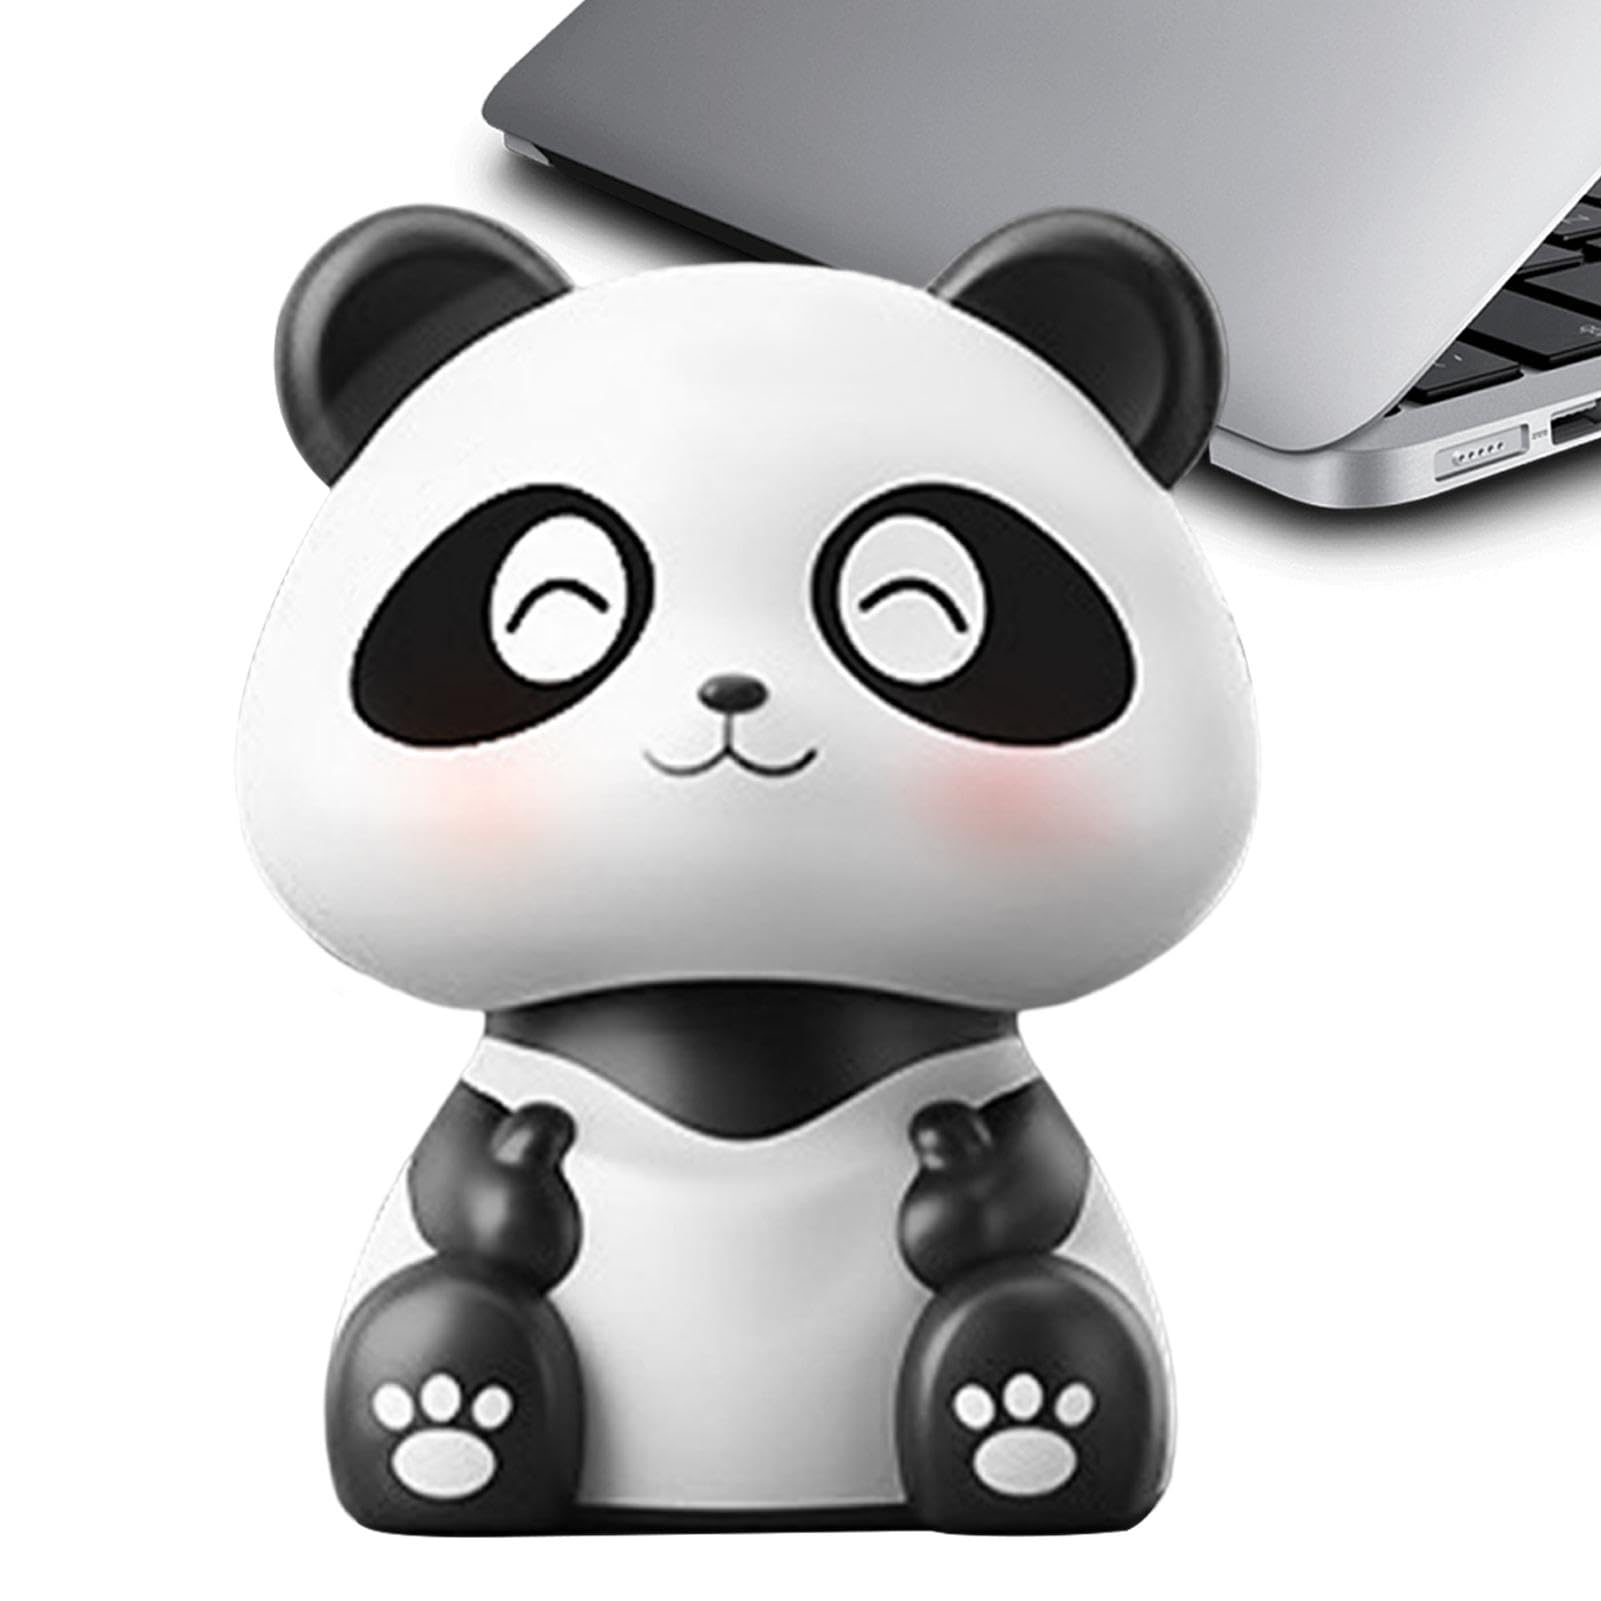 Panda-Armaturenbrett-Dekorationen,Auto-Armaturenbrett-Dekorationen Panda,Panda-Autozubehör - Solarbetriebener niedlicher Panda, automatischer Kopf schwingende Auto-Armaturenbrett-Dekorationen von Tewzafiya